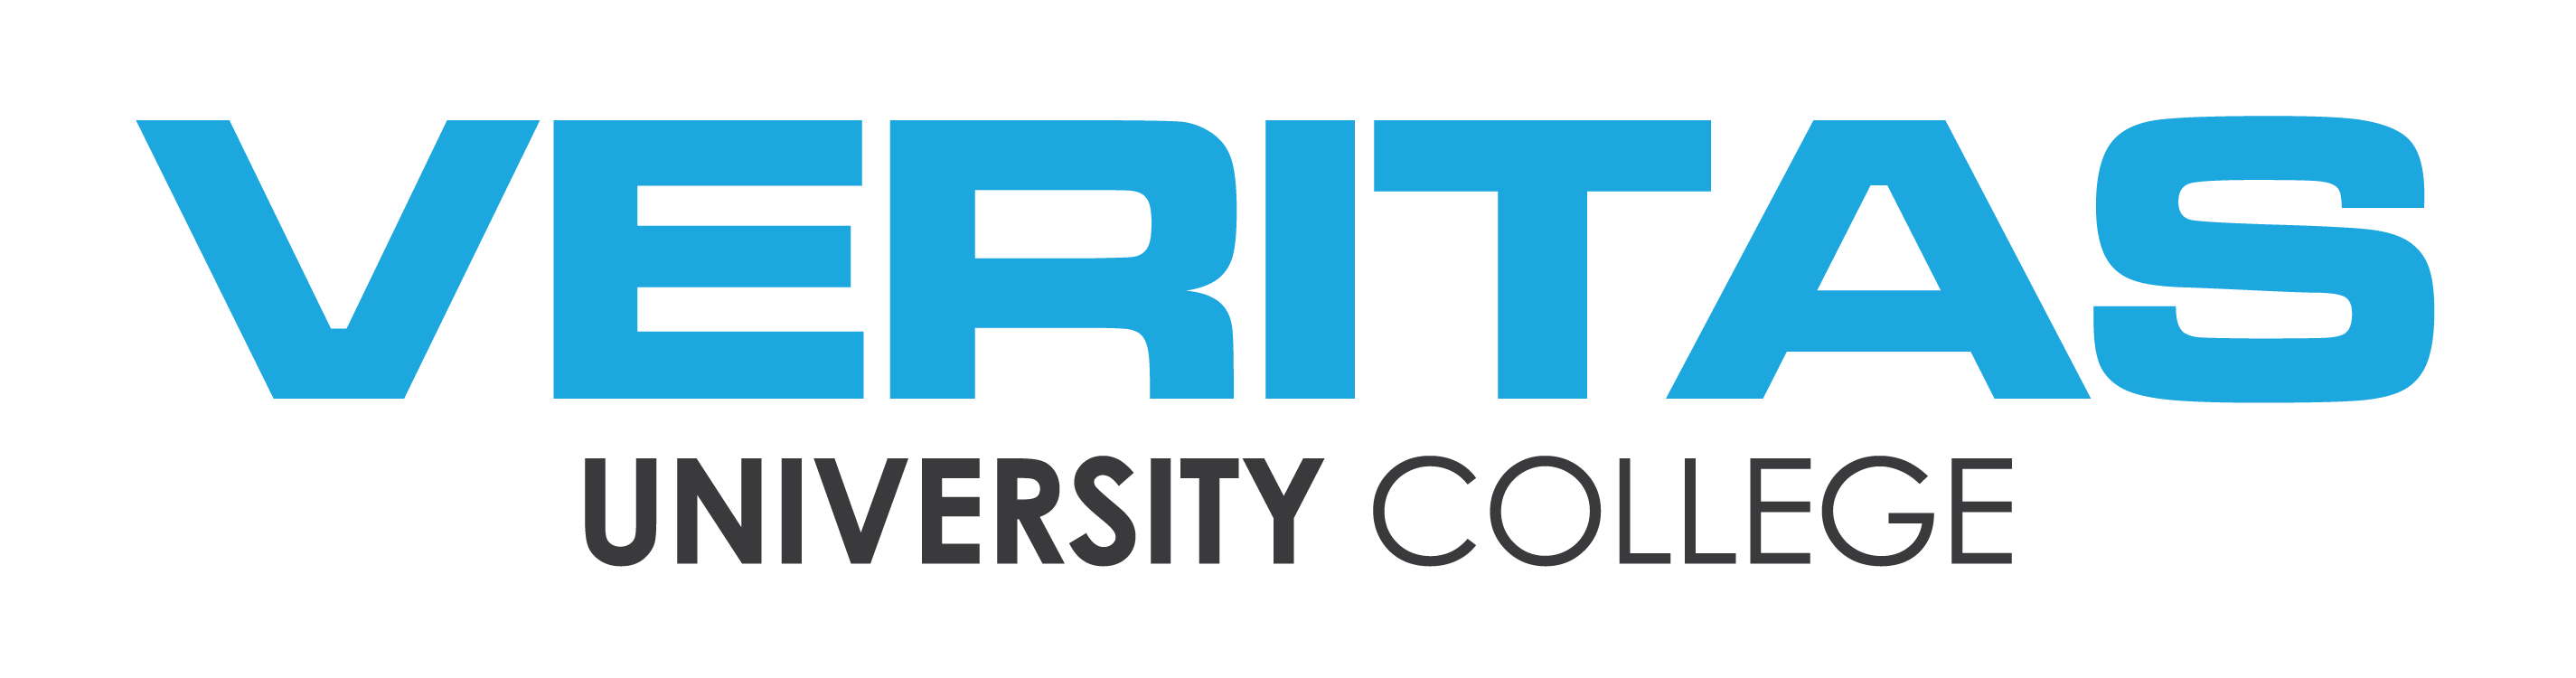 Ve RI Tas Logo - Welcome to Veritas University College (VUC)